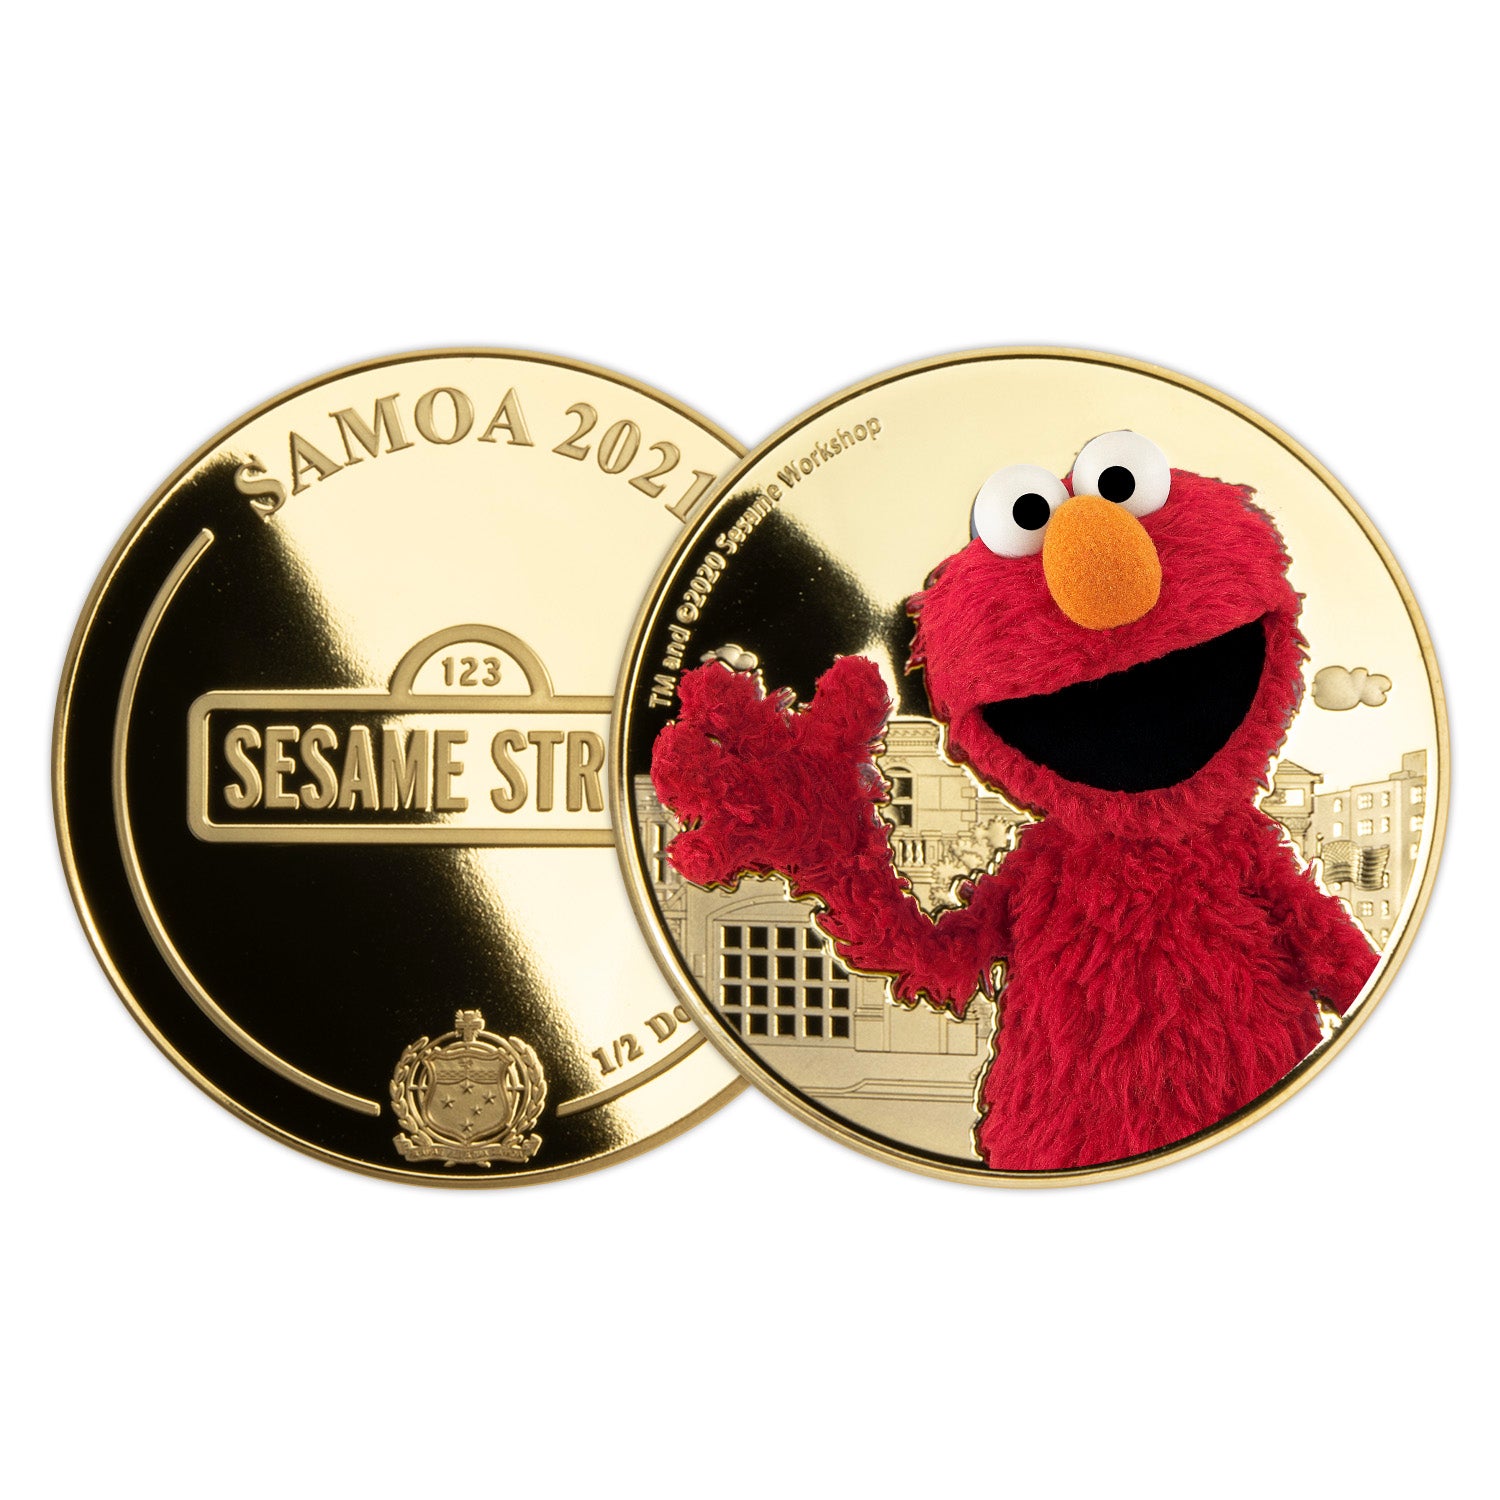 Sesame Street Elmo Gold Plated Coin